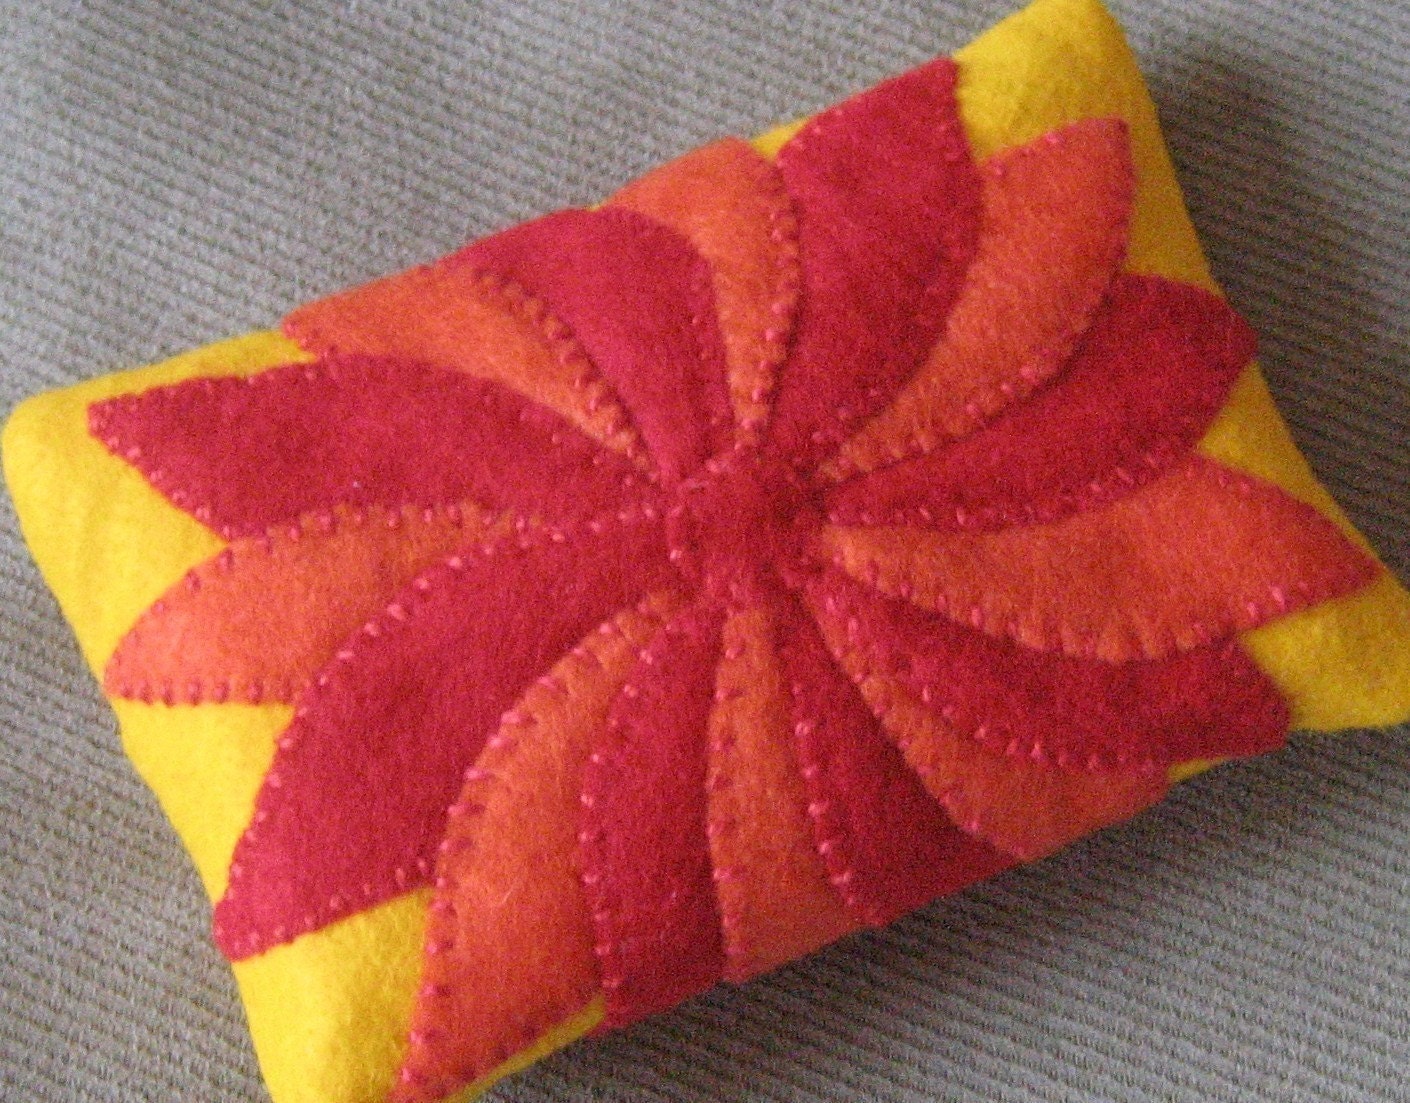 Red and Orange Pinwheel Flower on Yellow Tissue Cozy - FELTITNYC